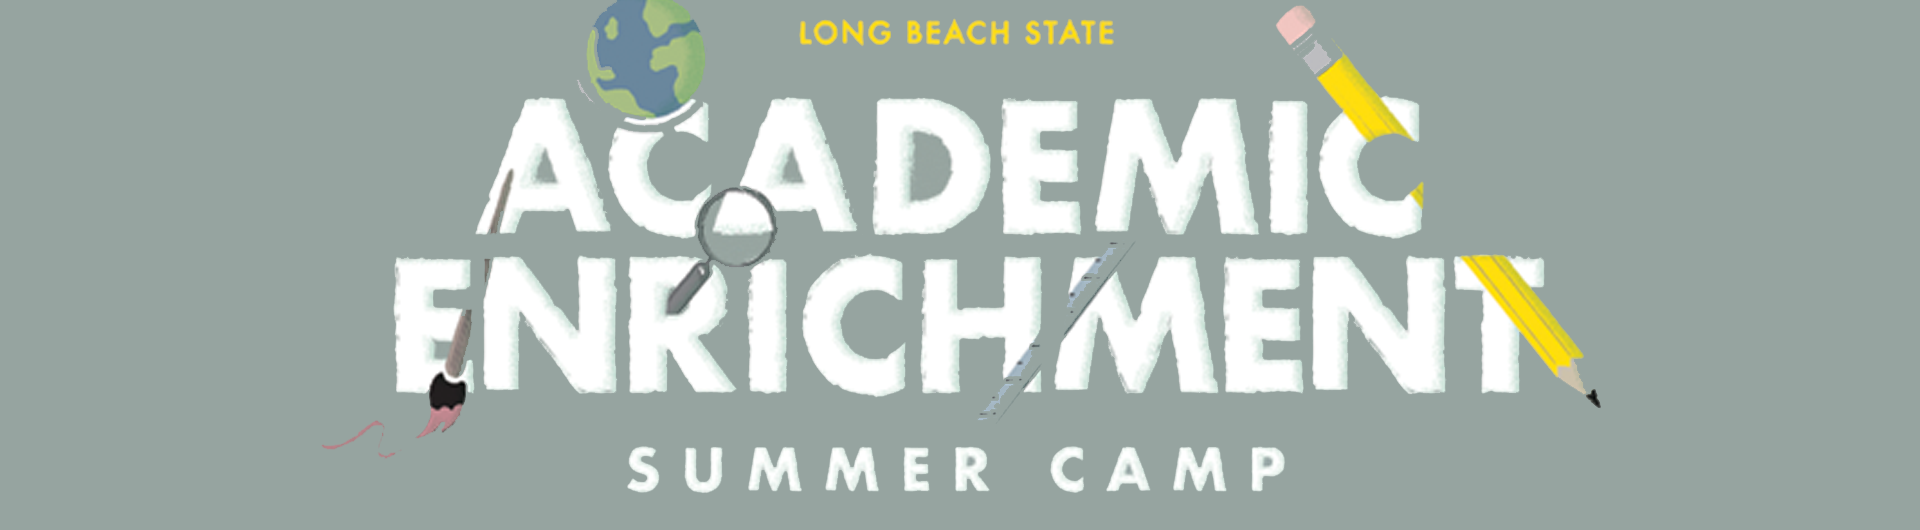 Long Beach State - Academic Enrichment Summer Camp